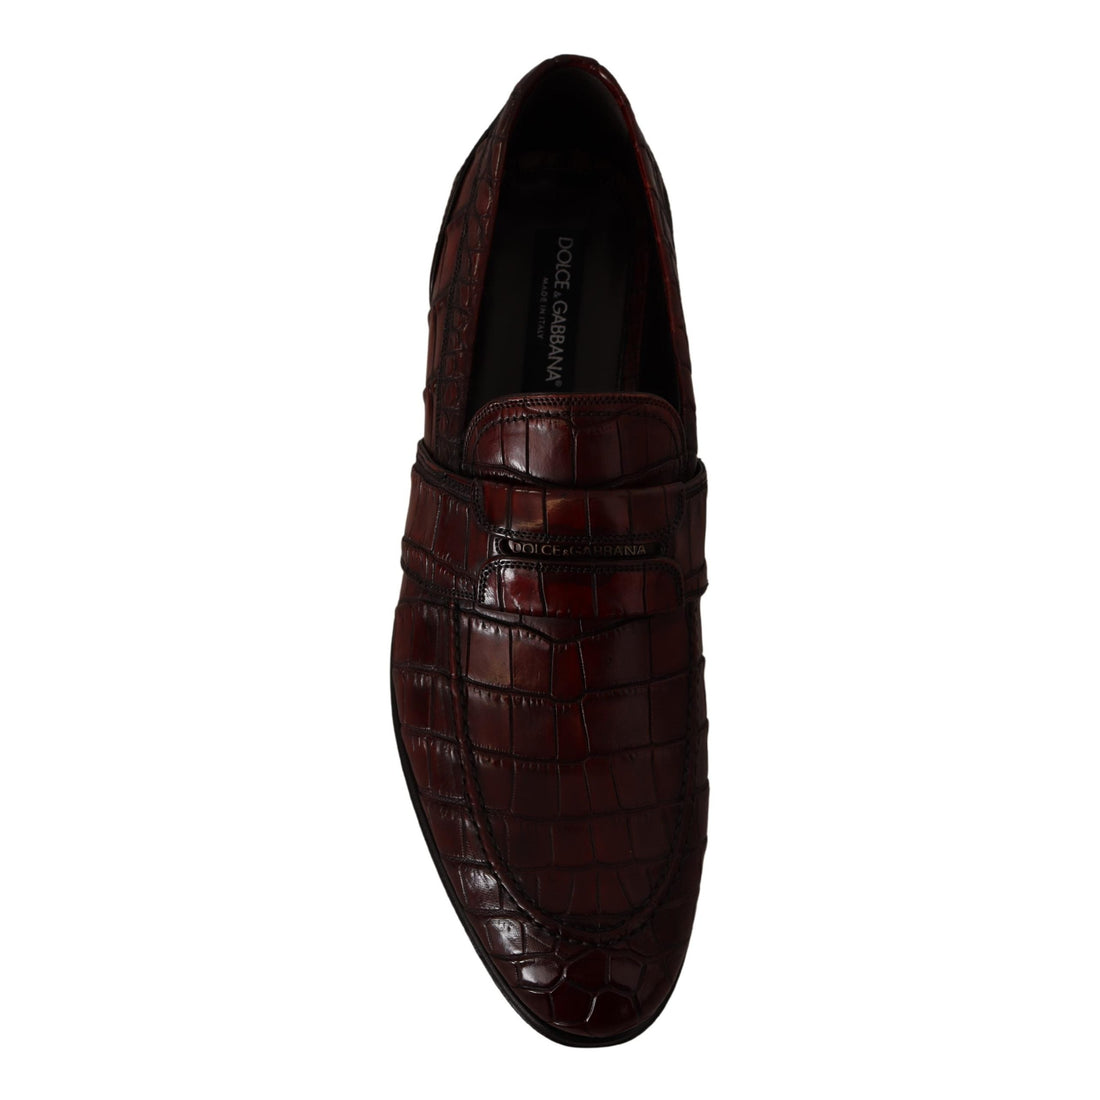 Dolce & Gabbana Bordeaux Exotic Leather Dress Derby  Shoes